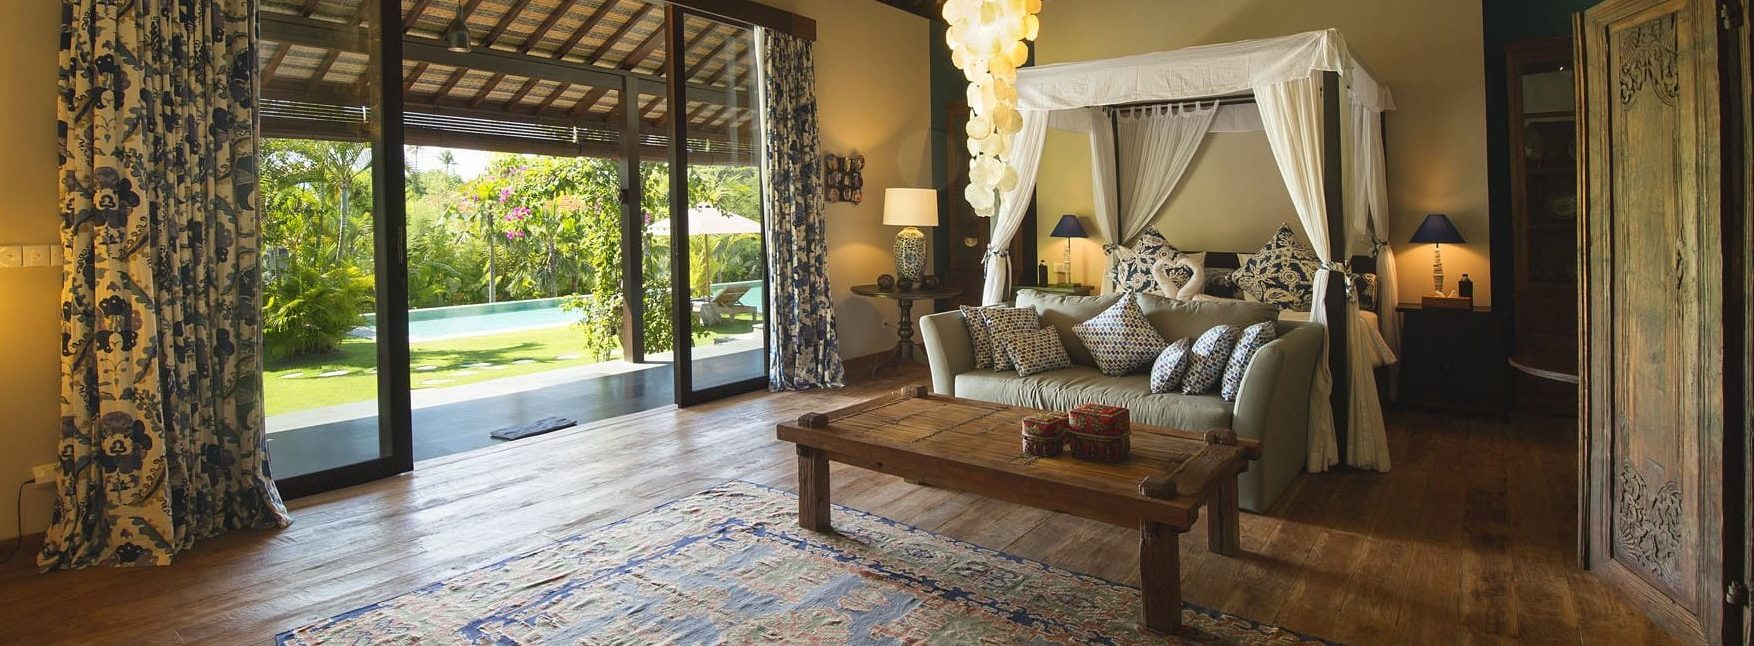 Villa Theo Bali -Luxury 5 bedroom villa in Umalas - Canggu